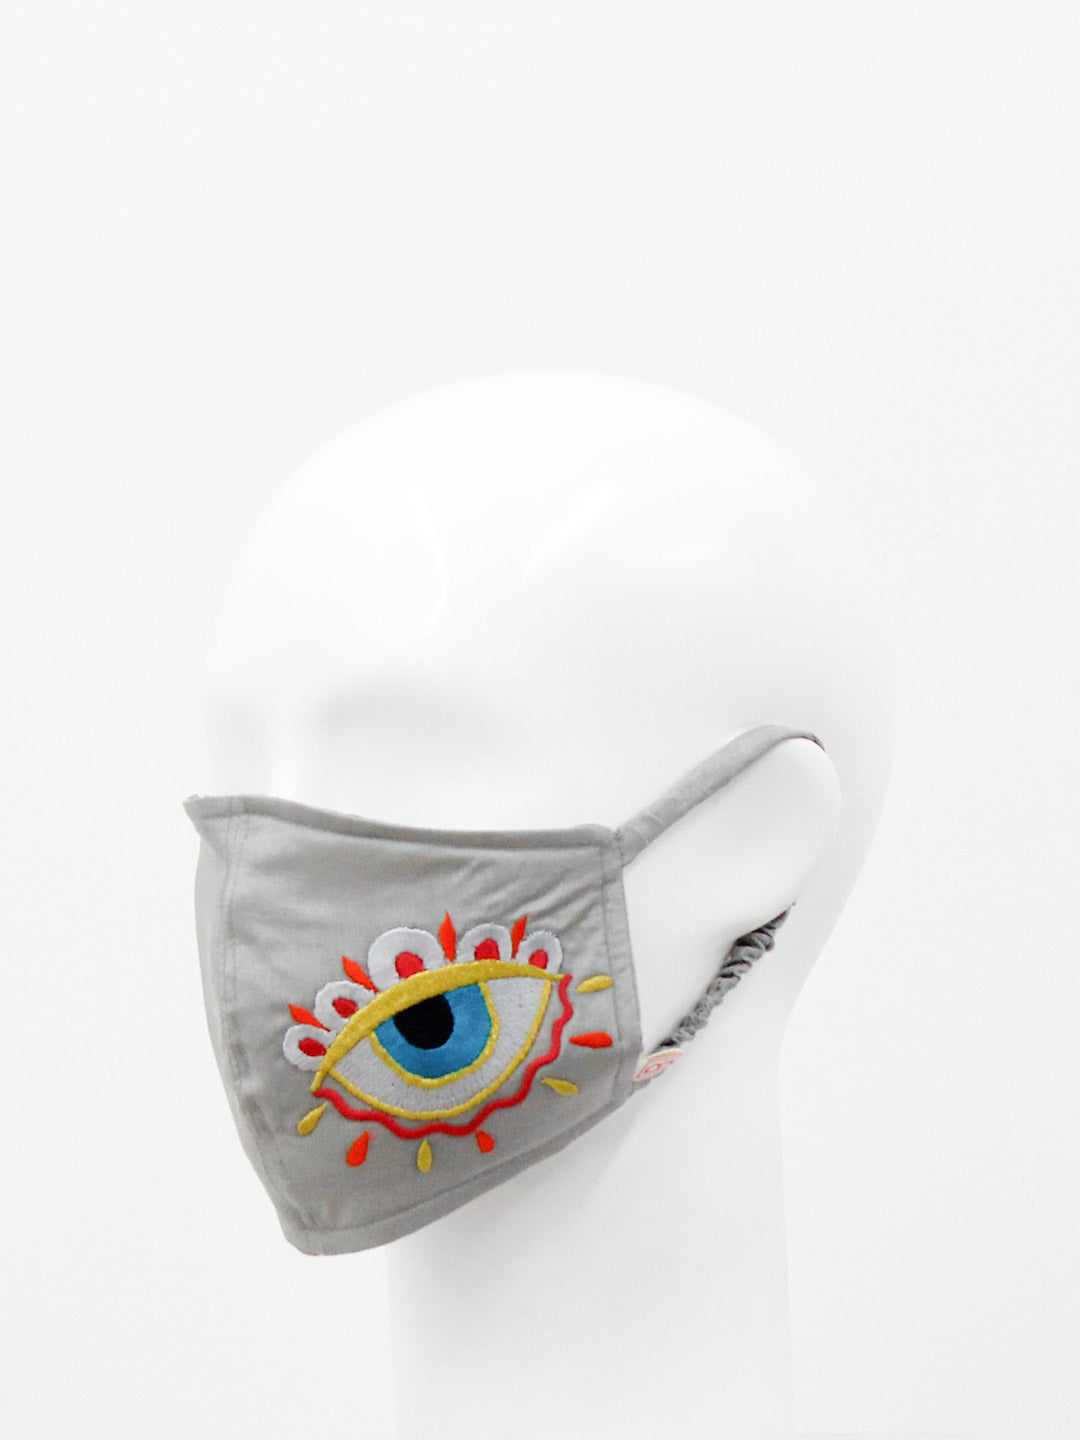 The Evil Eye Mask